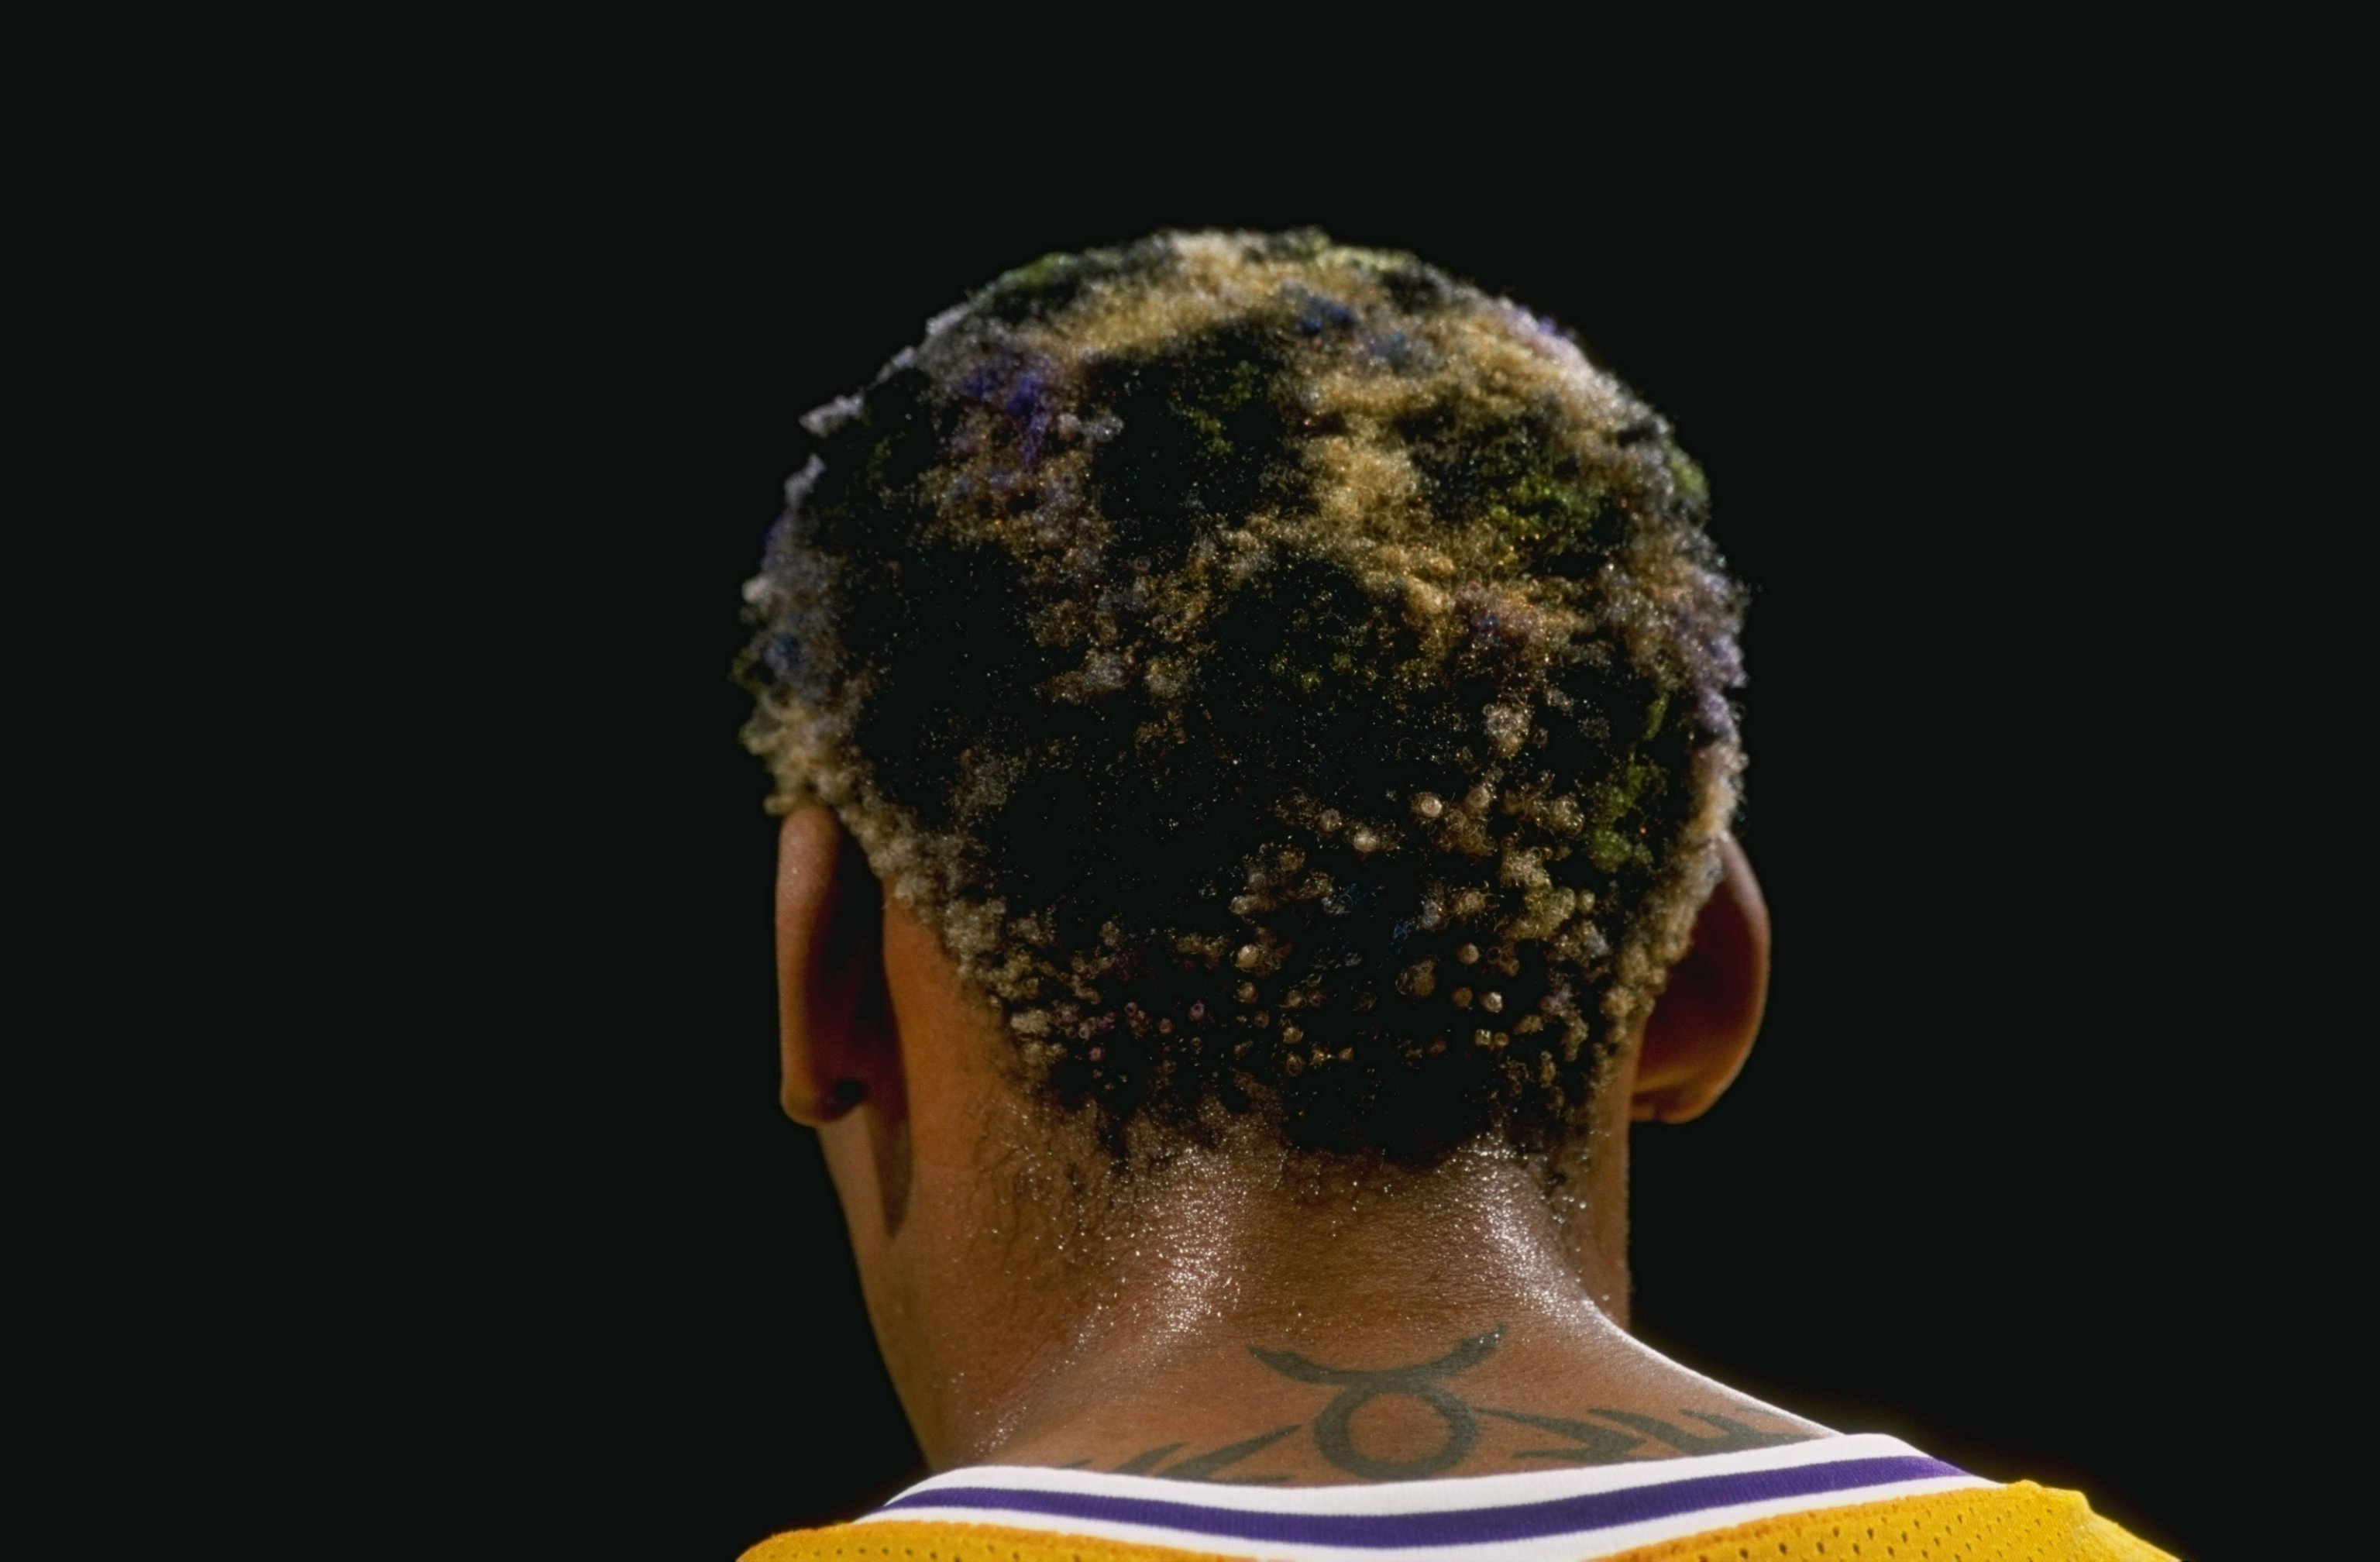 Bleacher Report - If NBA stars had Dennis Rodman-style hair